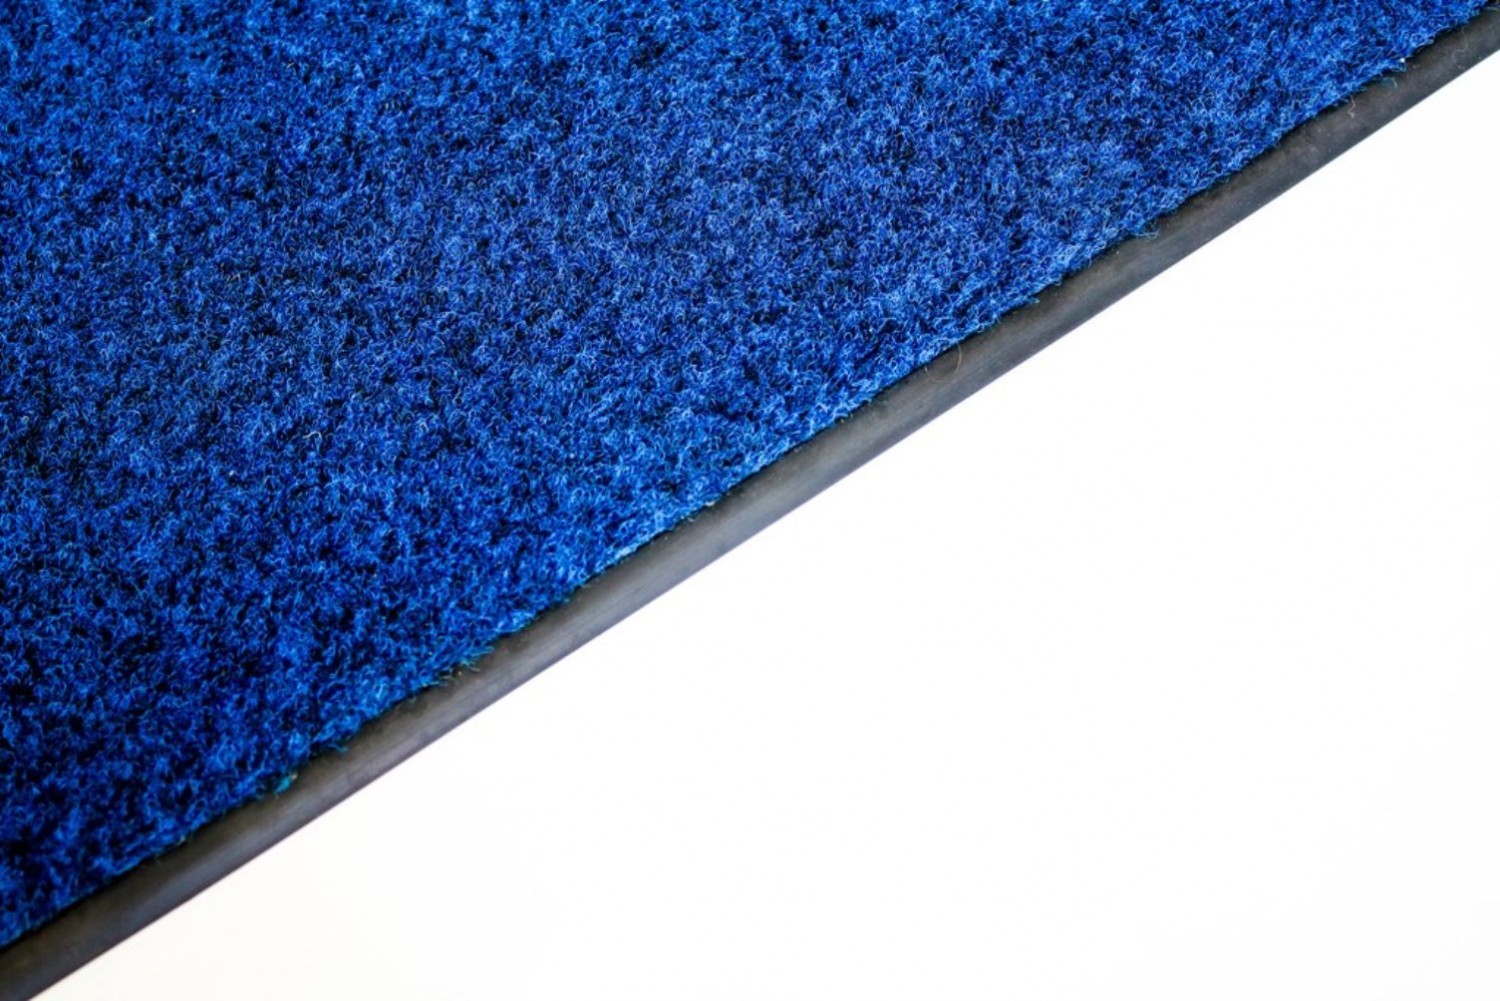 Brilliant Bross blue mats